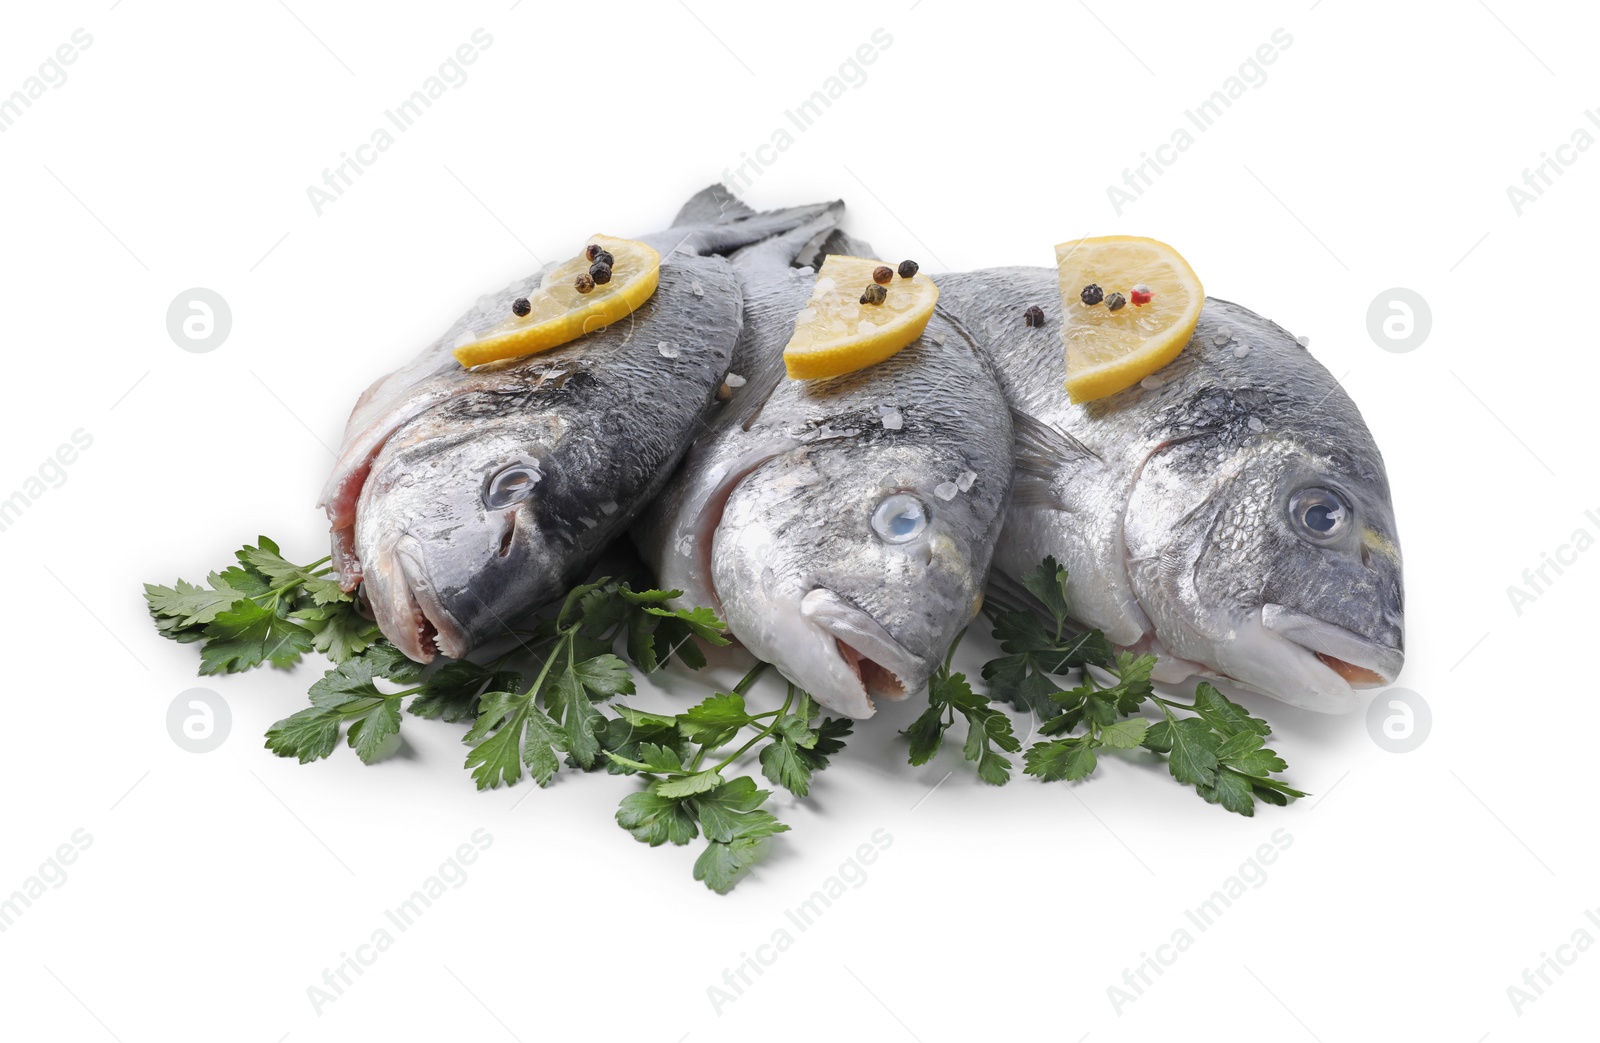 Photo of Raw dorado fish, parsley, lemon slices and peppercorns isolated on white